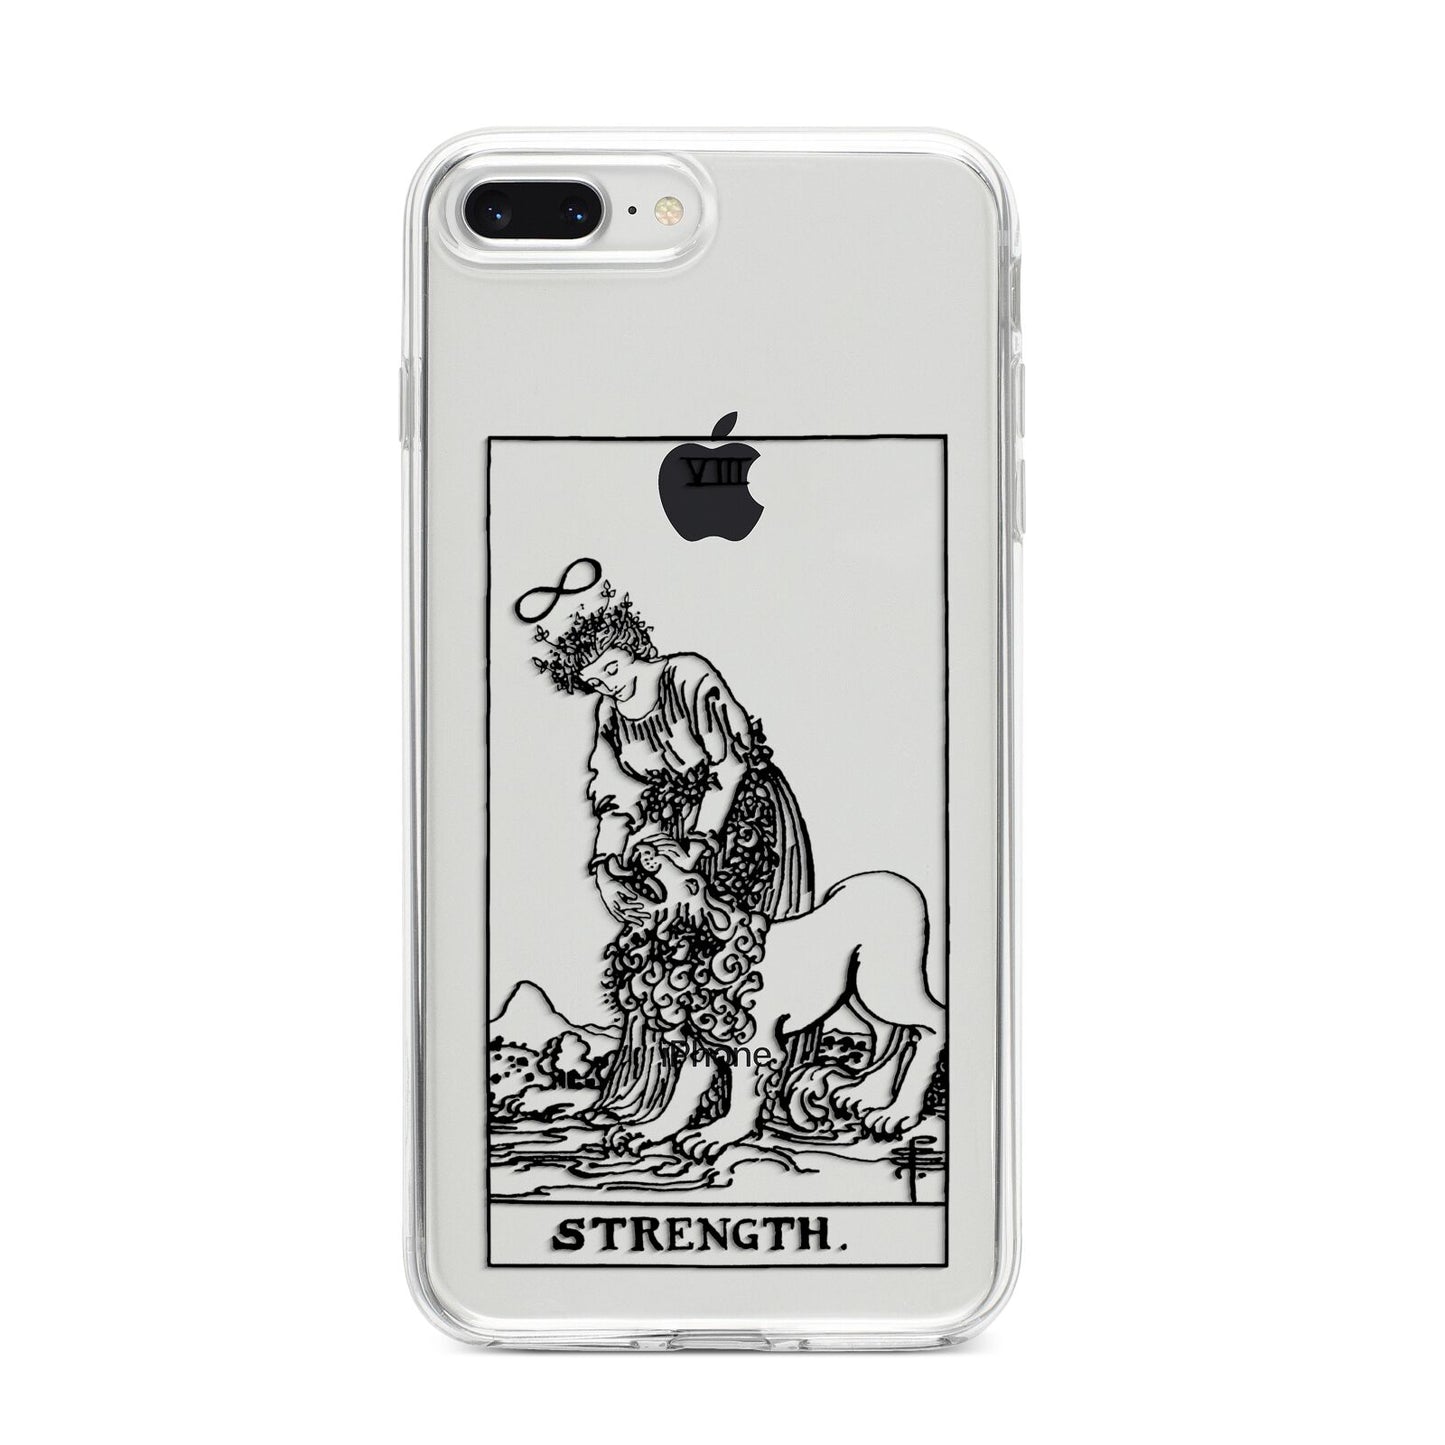 Strength Monochrome Tarot Card iPhone 8 Plus Bumper Case on Silver iPhone